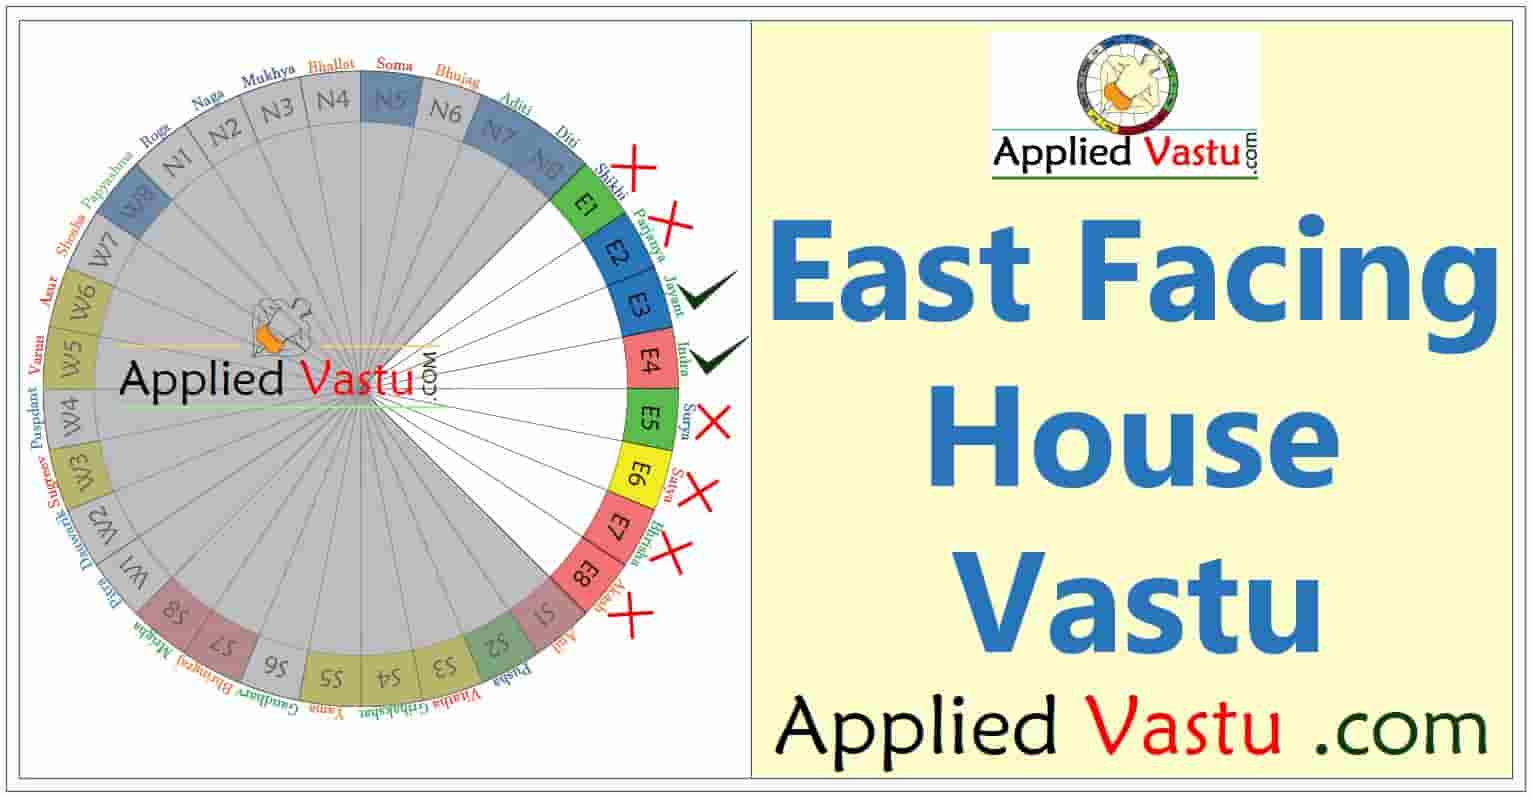 East facing house vastu - Vastu for east facing house